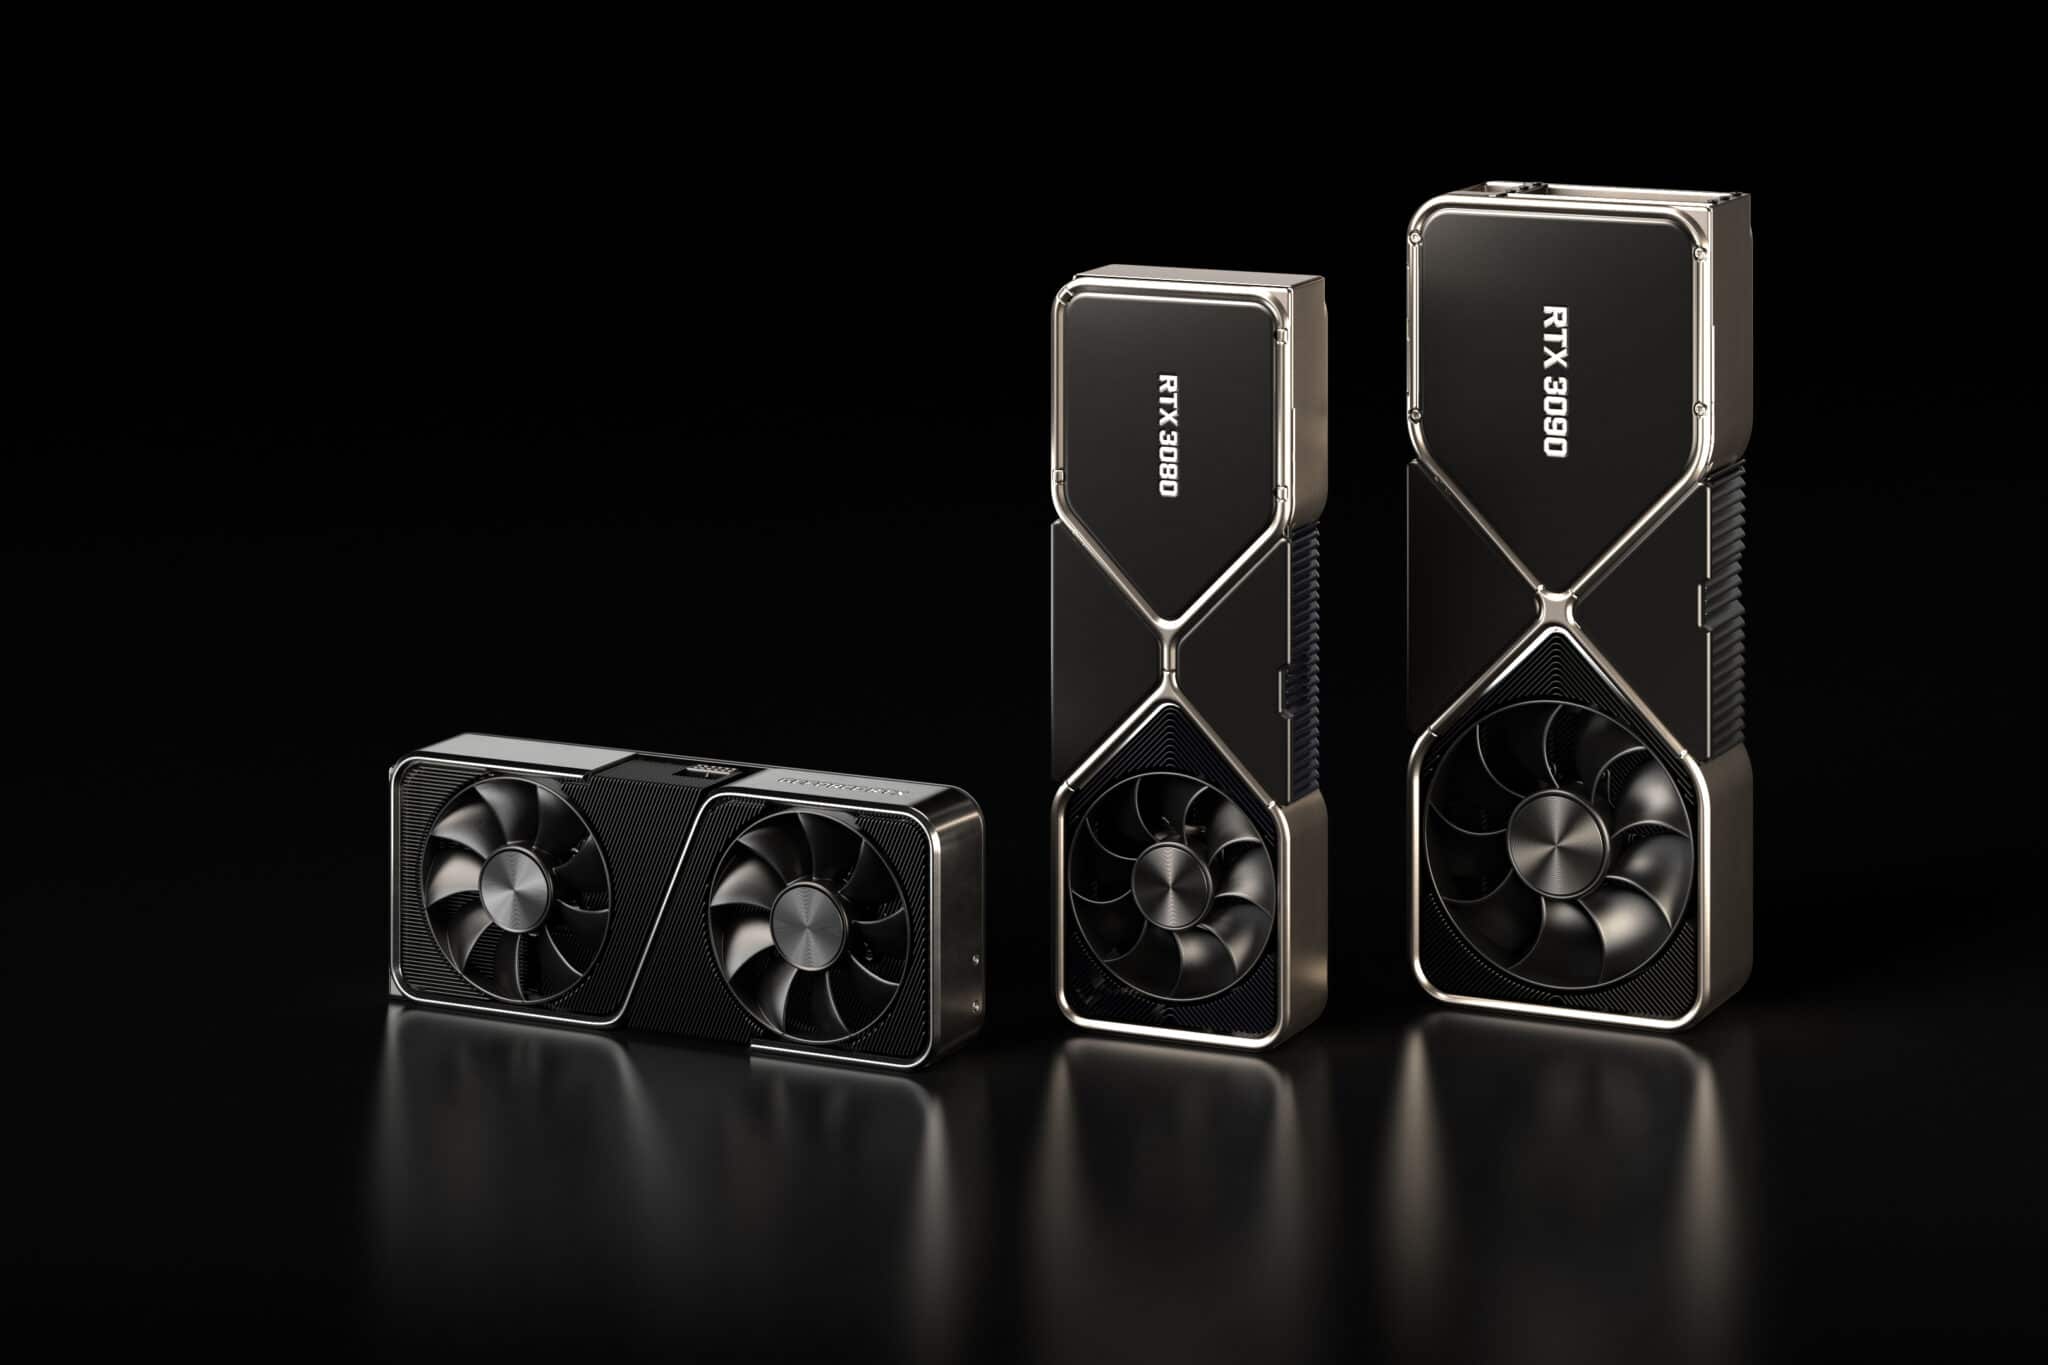 Newegg Adds GeForce RTX 30 Series